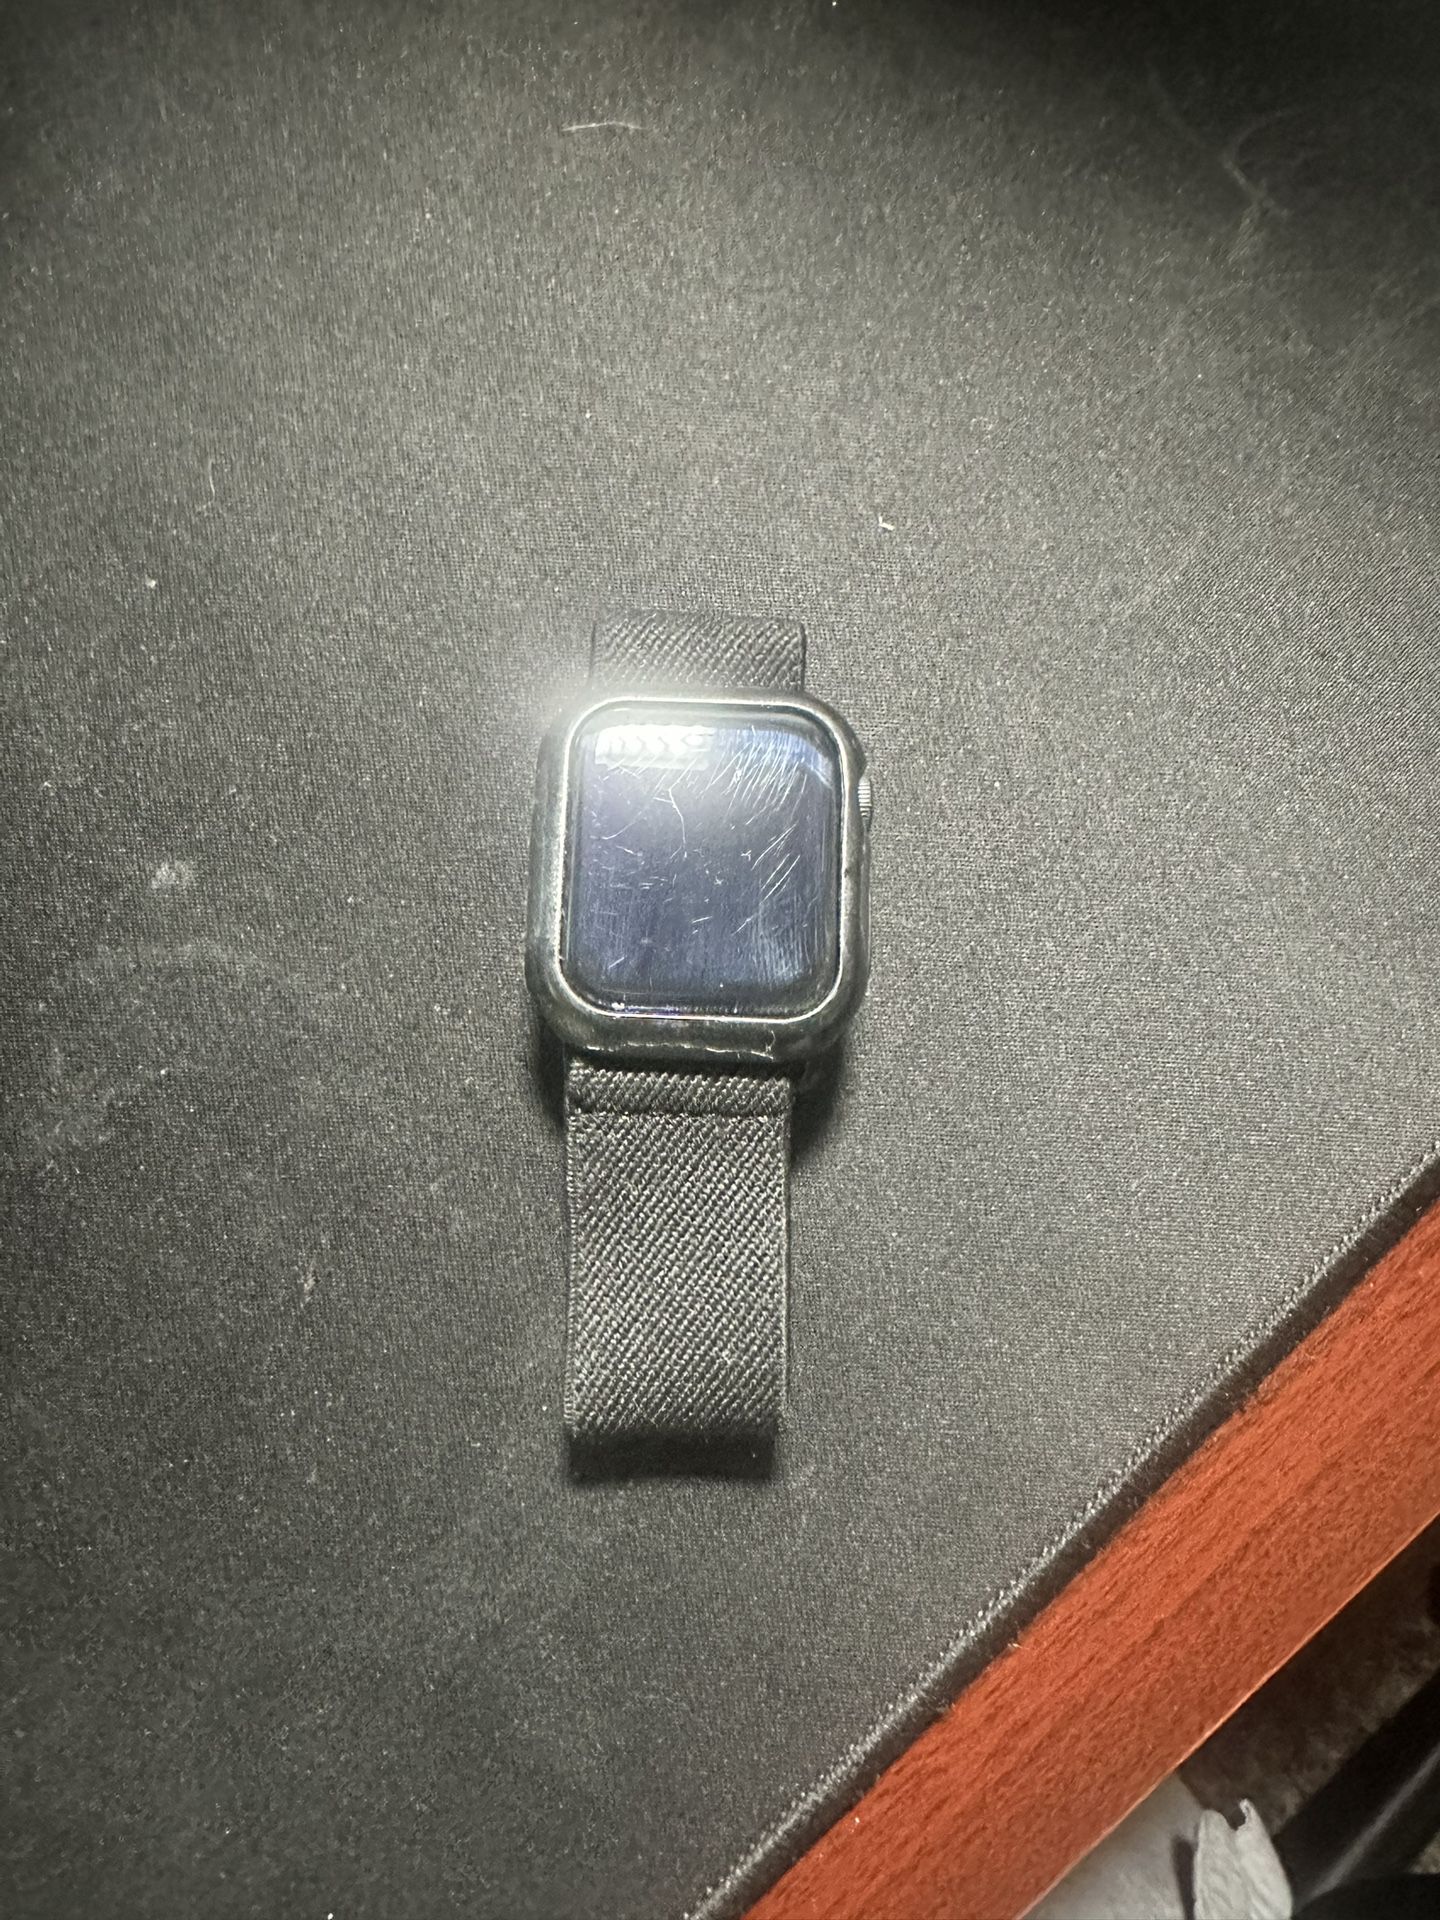 Series 5 Apple Watch